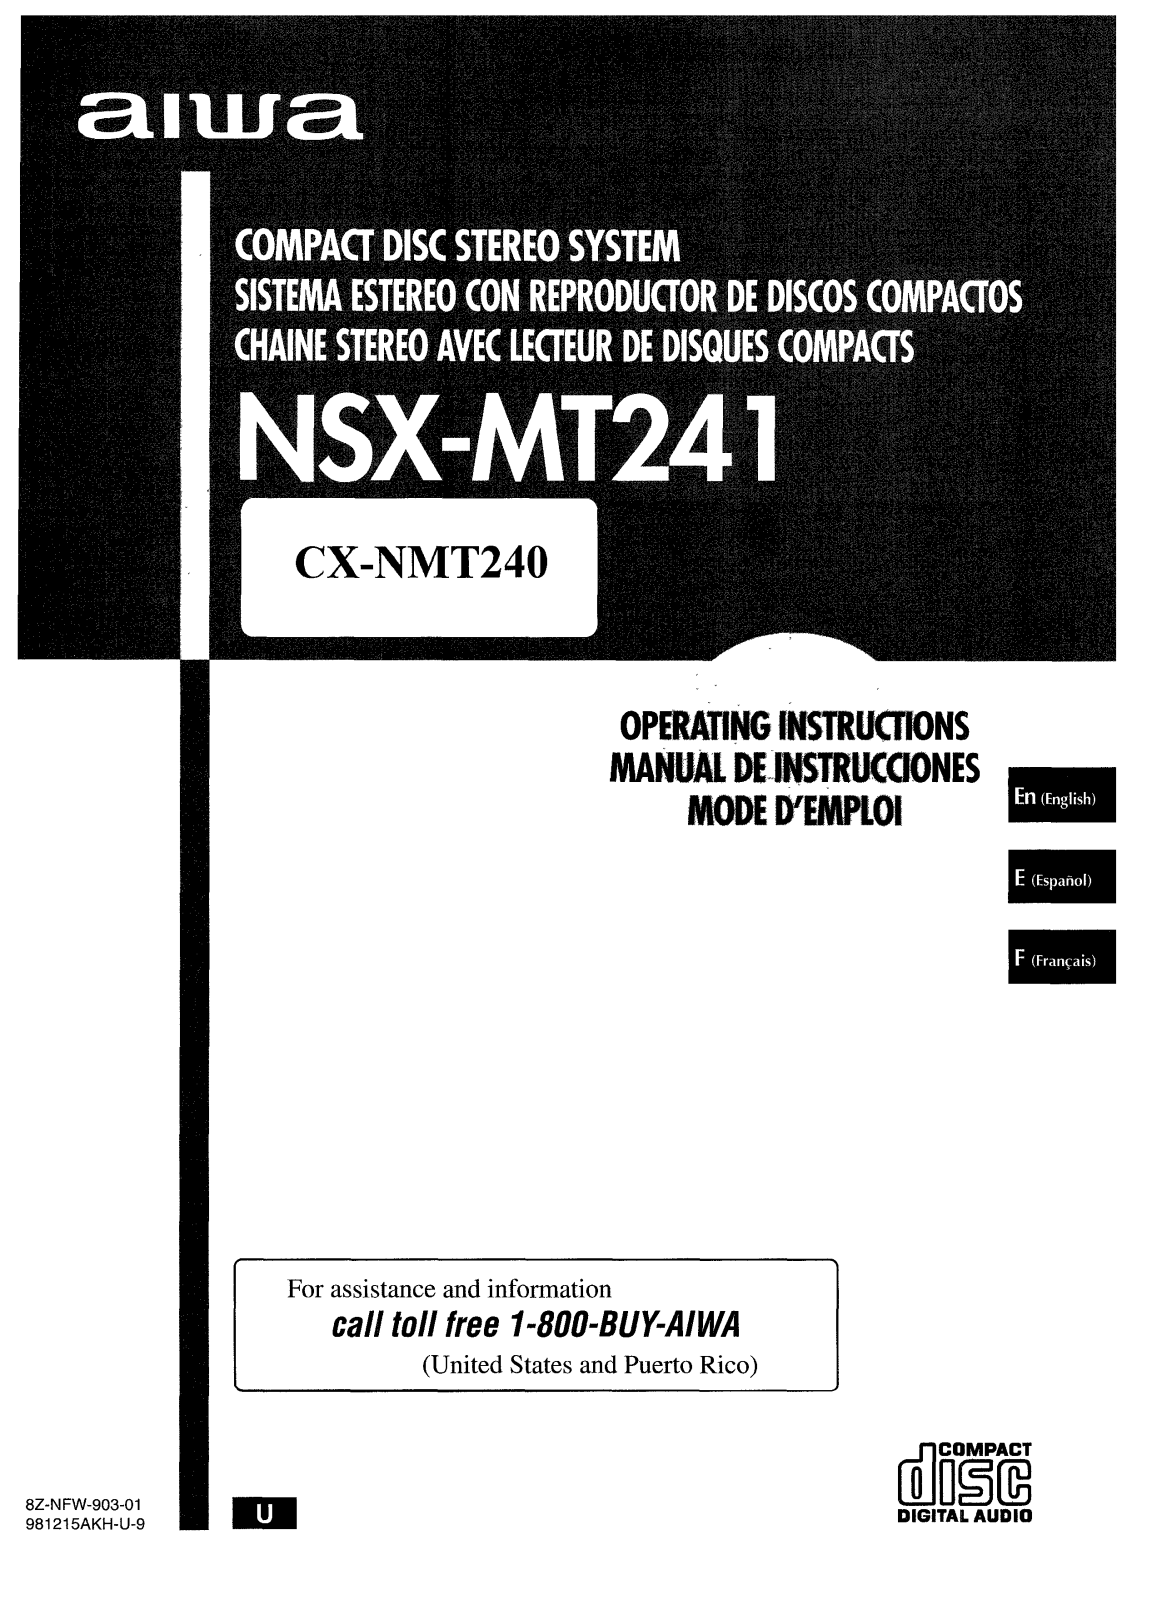 Sony CXNMT240, CXNMT241 Operating Manual